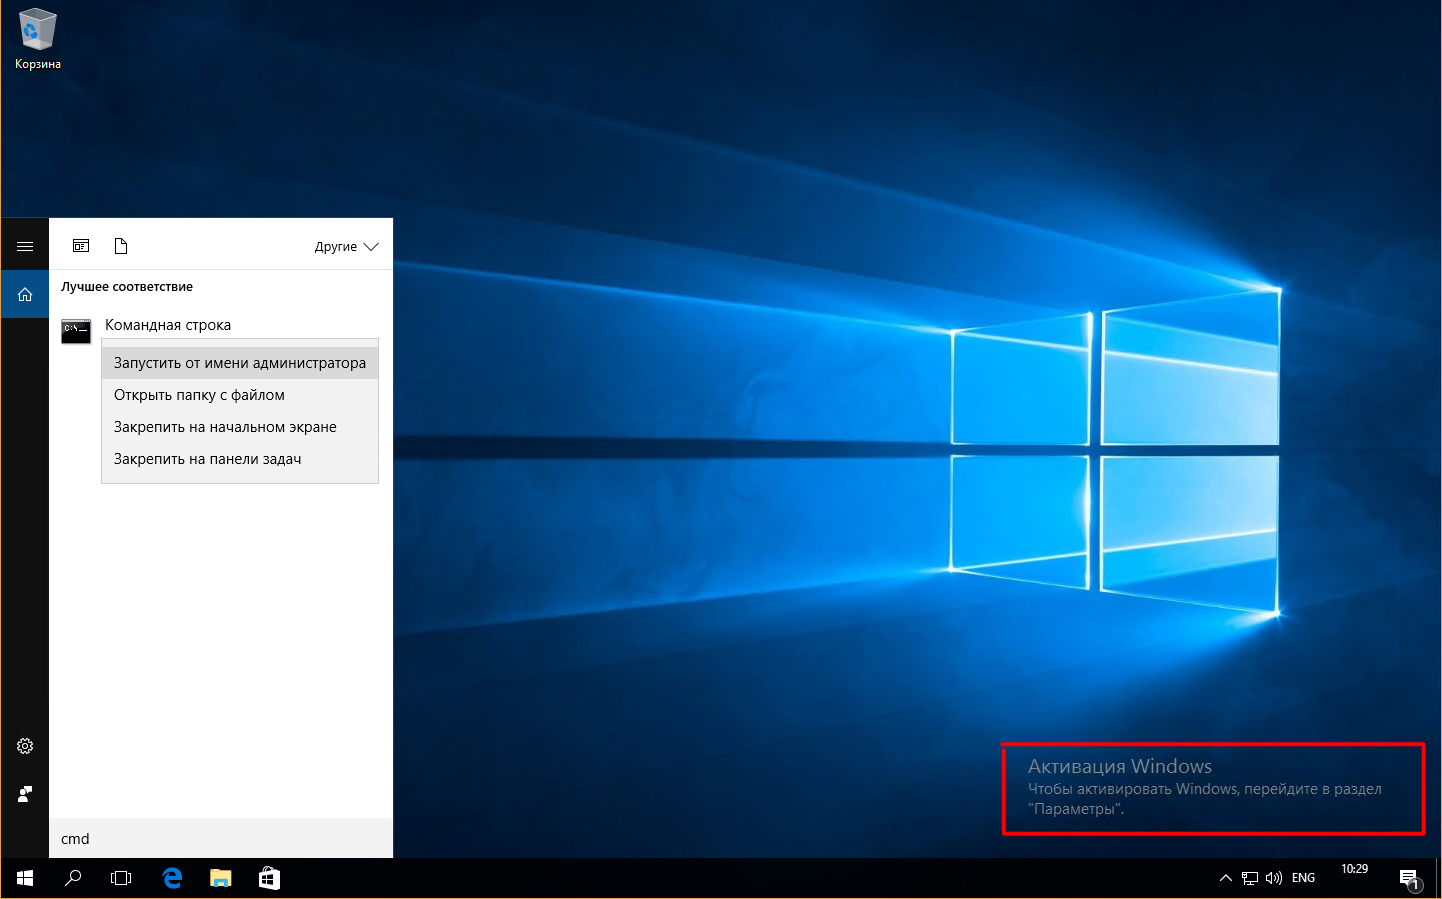 Enable windows 10. Активация Windows 10. Табличка активация Windows 10. Неактивированная виндовс 10. Windows 10 не активирована.